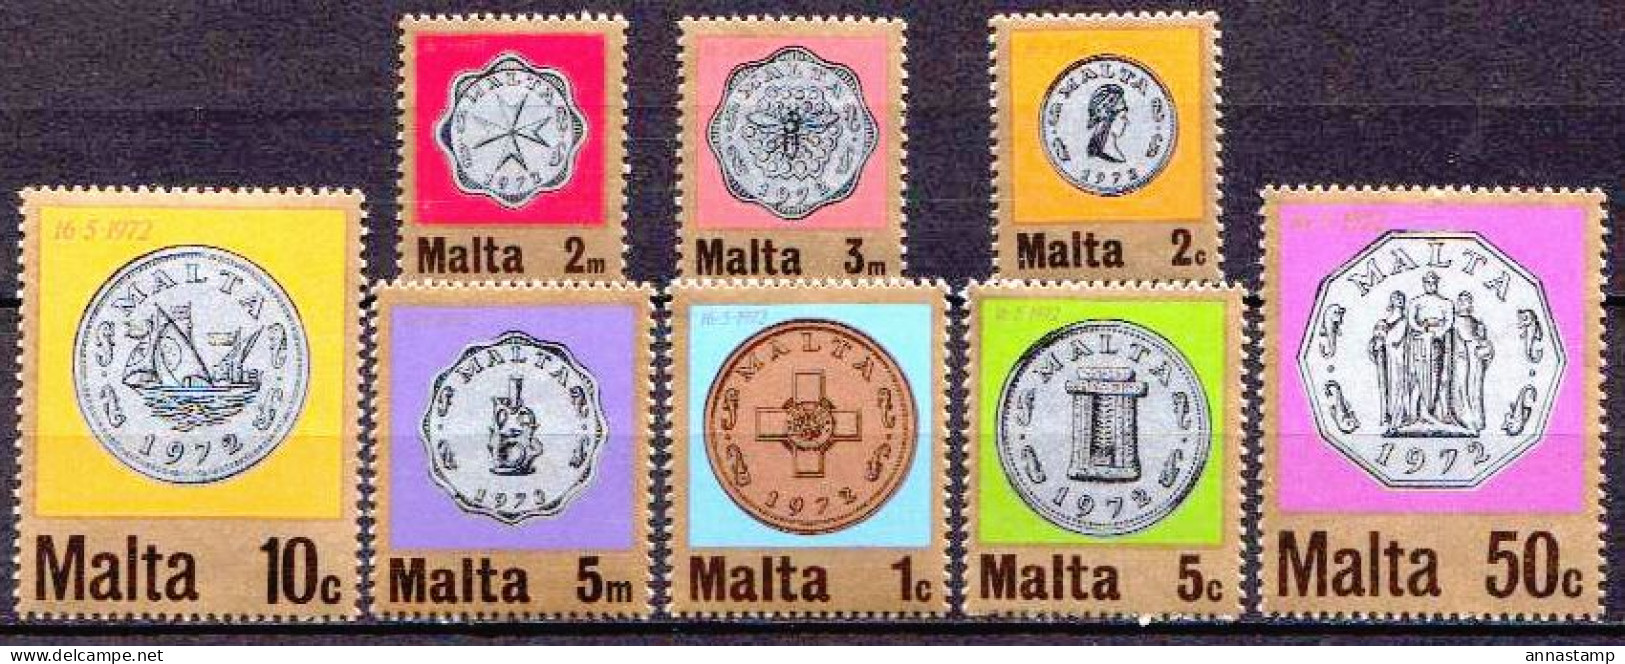 Malta MNH Set - Coins